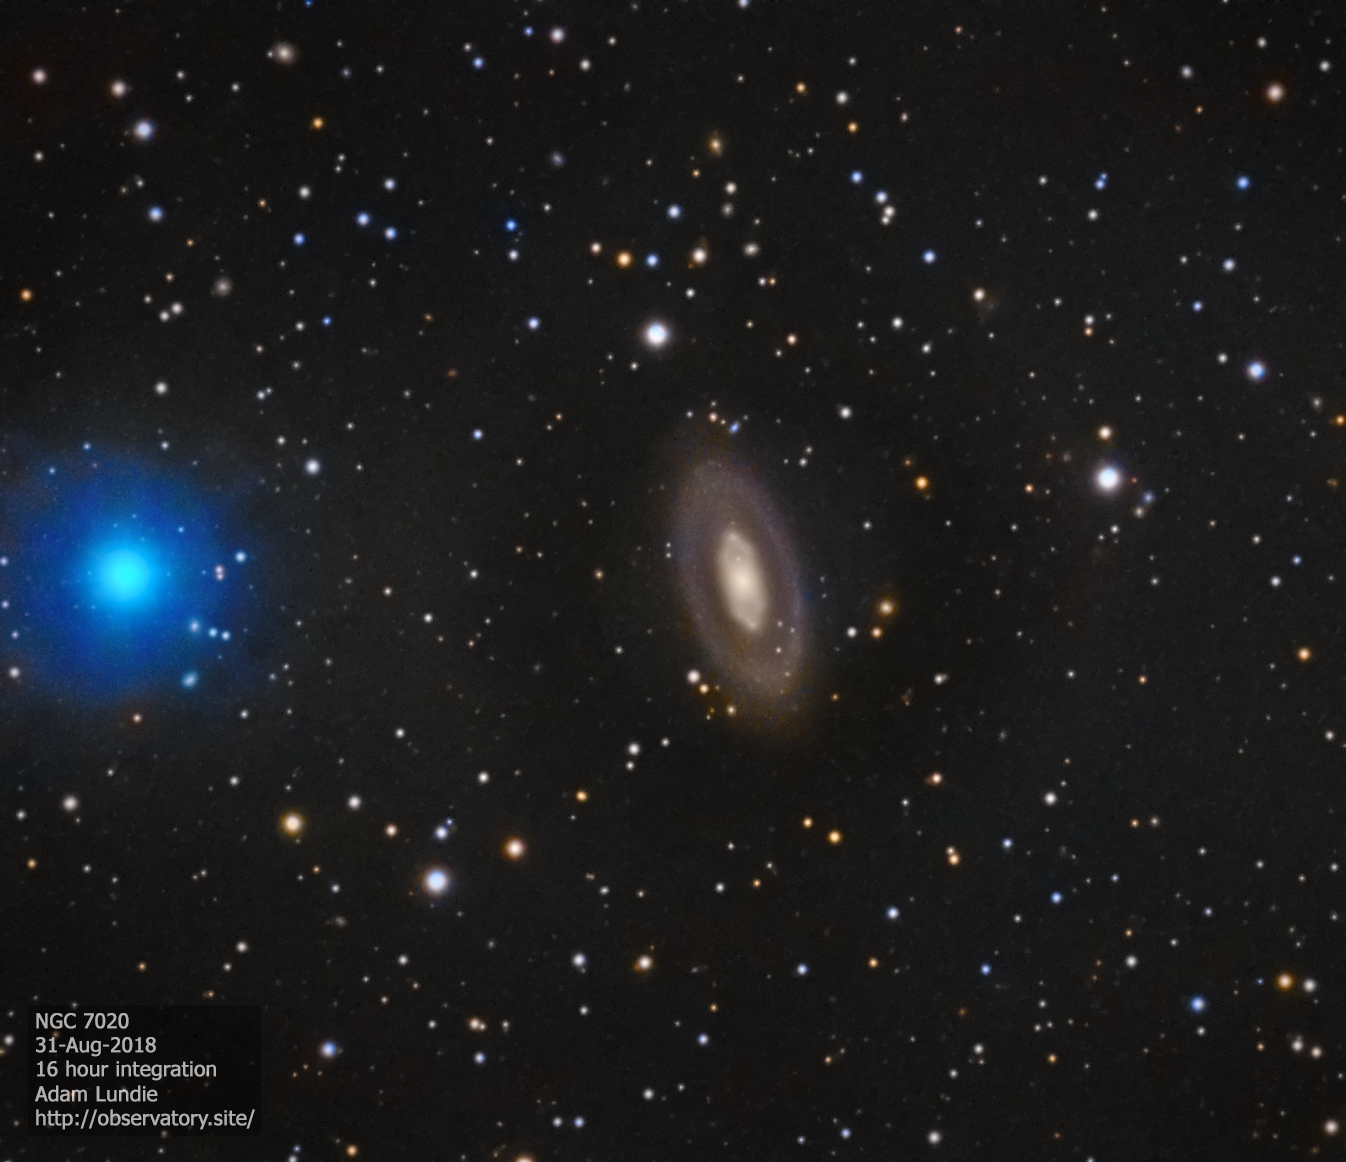 Ringed Galaxy NGC 7020